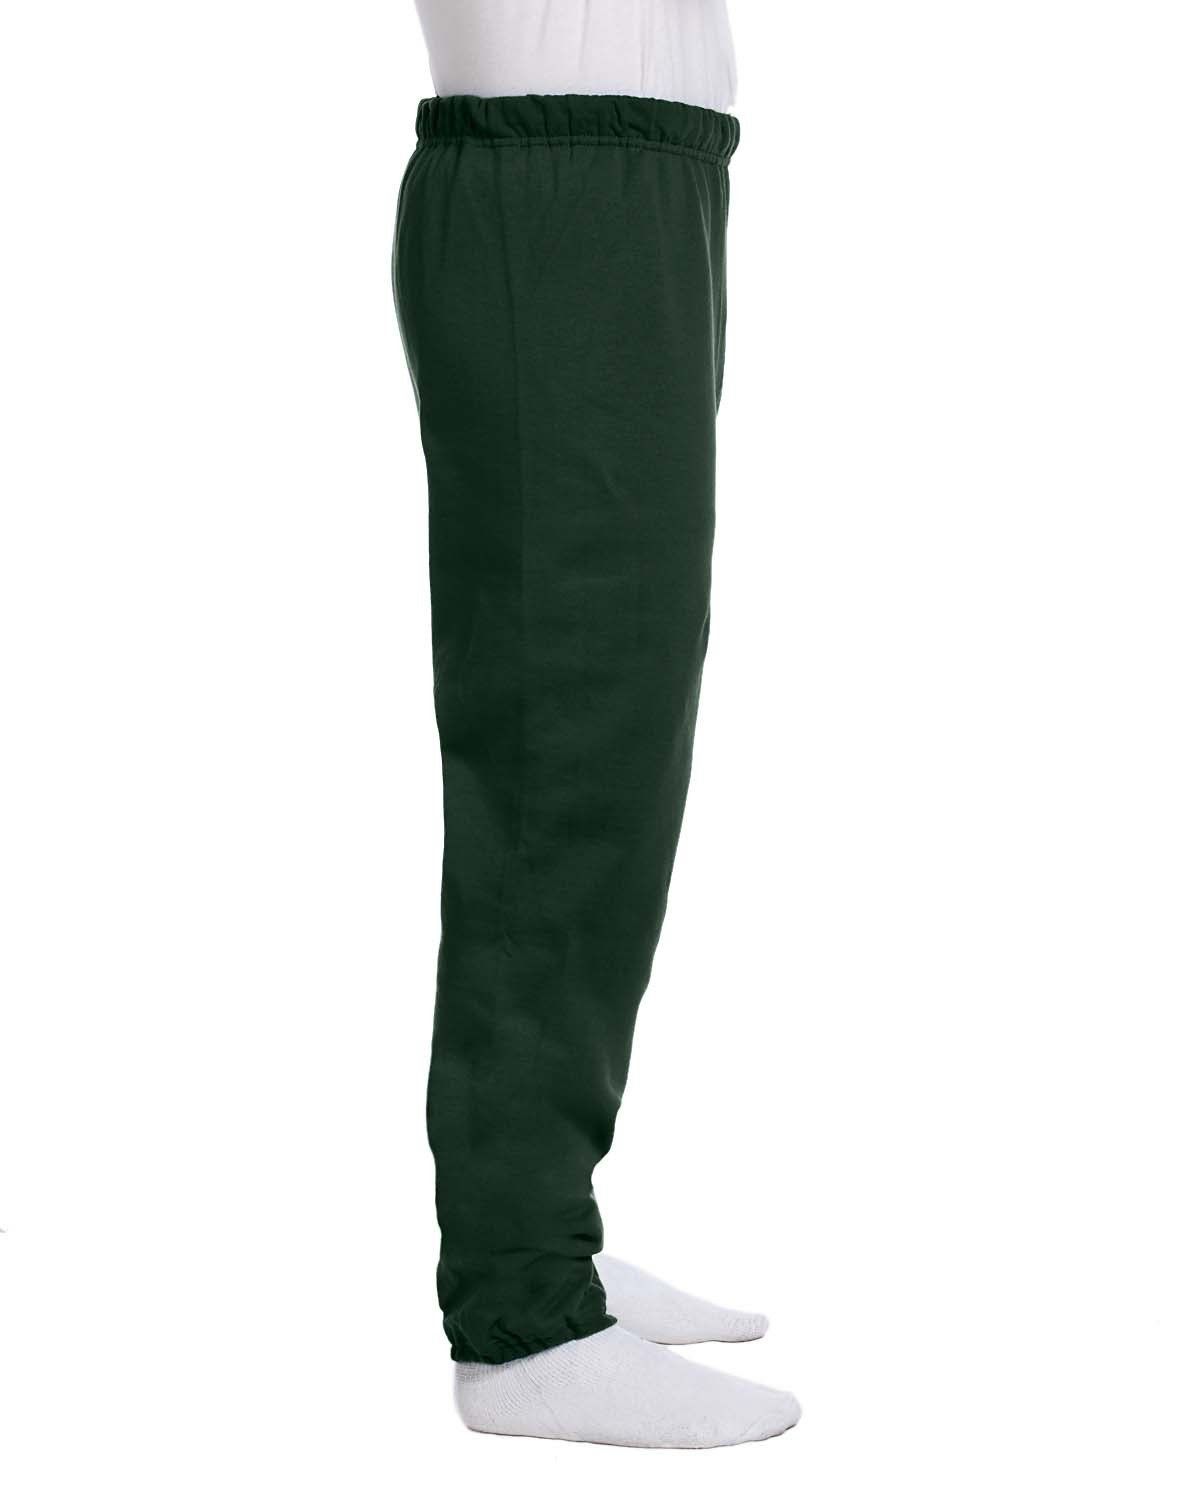 Adult 8 oz. NuBlend® Fleece Sweatpants